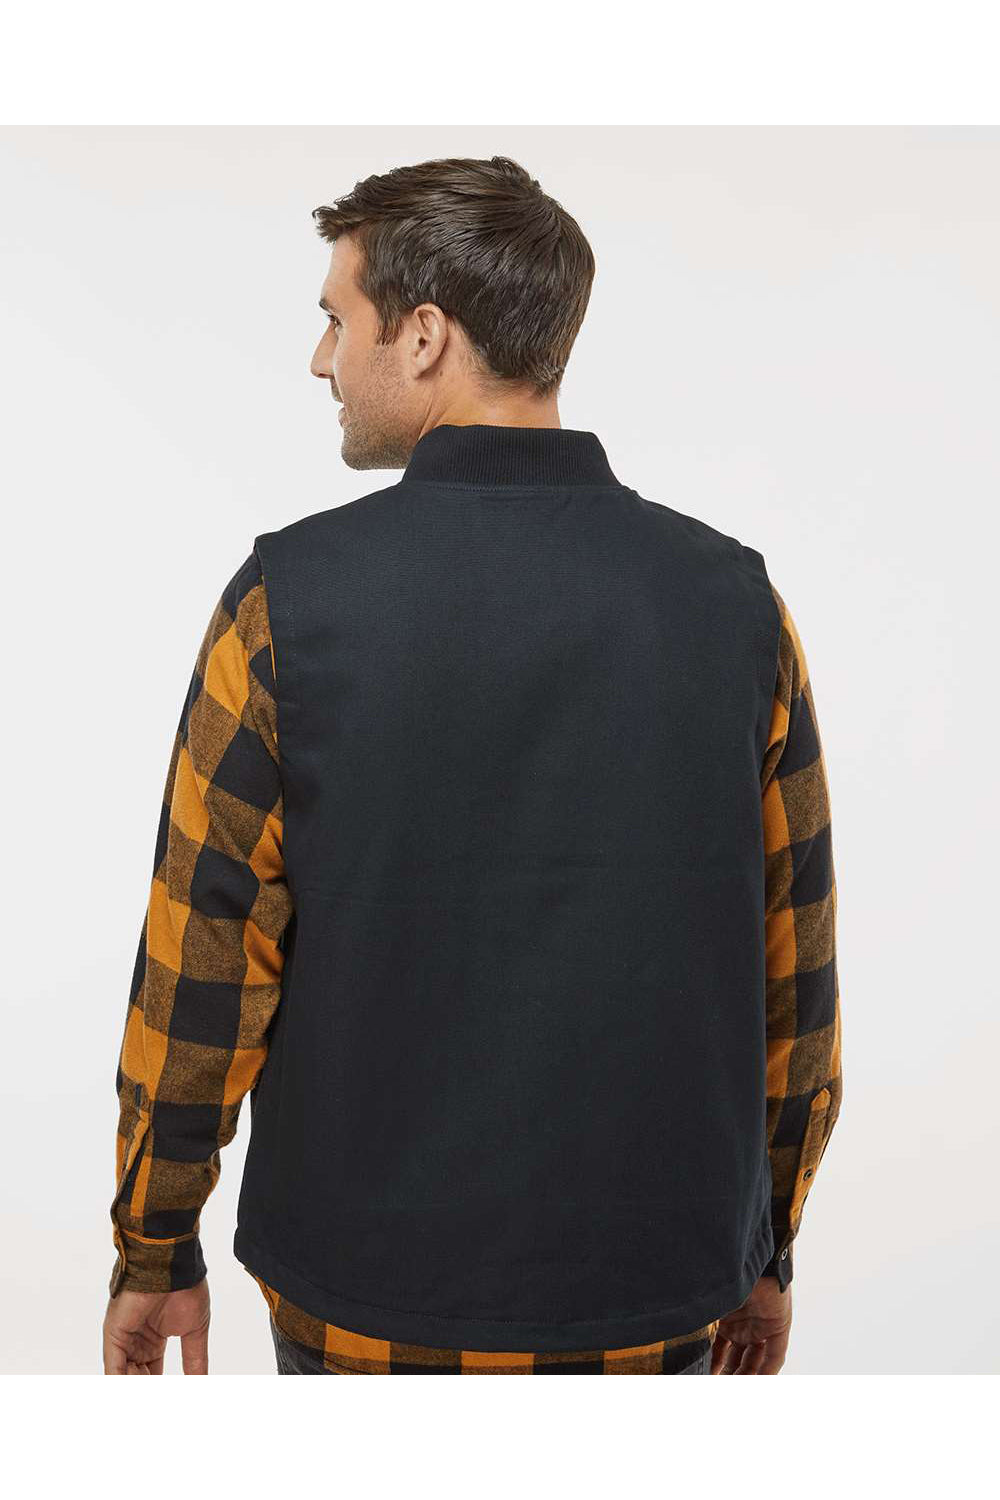 Independent Trading Co. EXP560V Mens Insulated Canvas Full Zip Vest Black Model Back